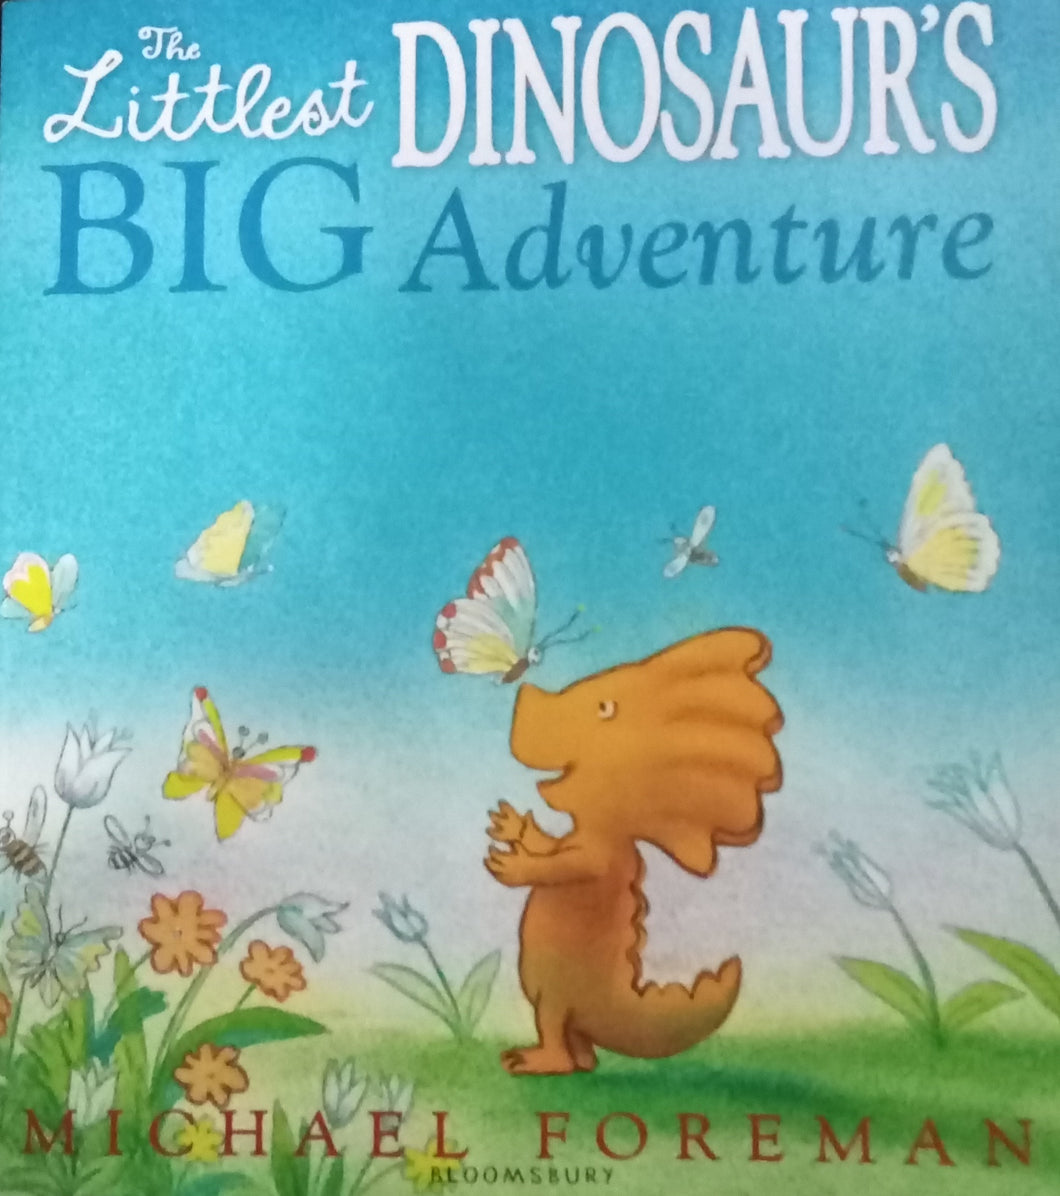 The Littlest Dinosaur's Big Adventure by Michael Foreman